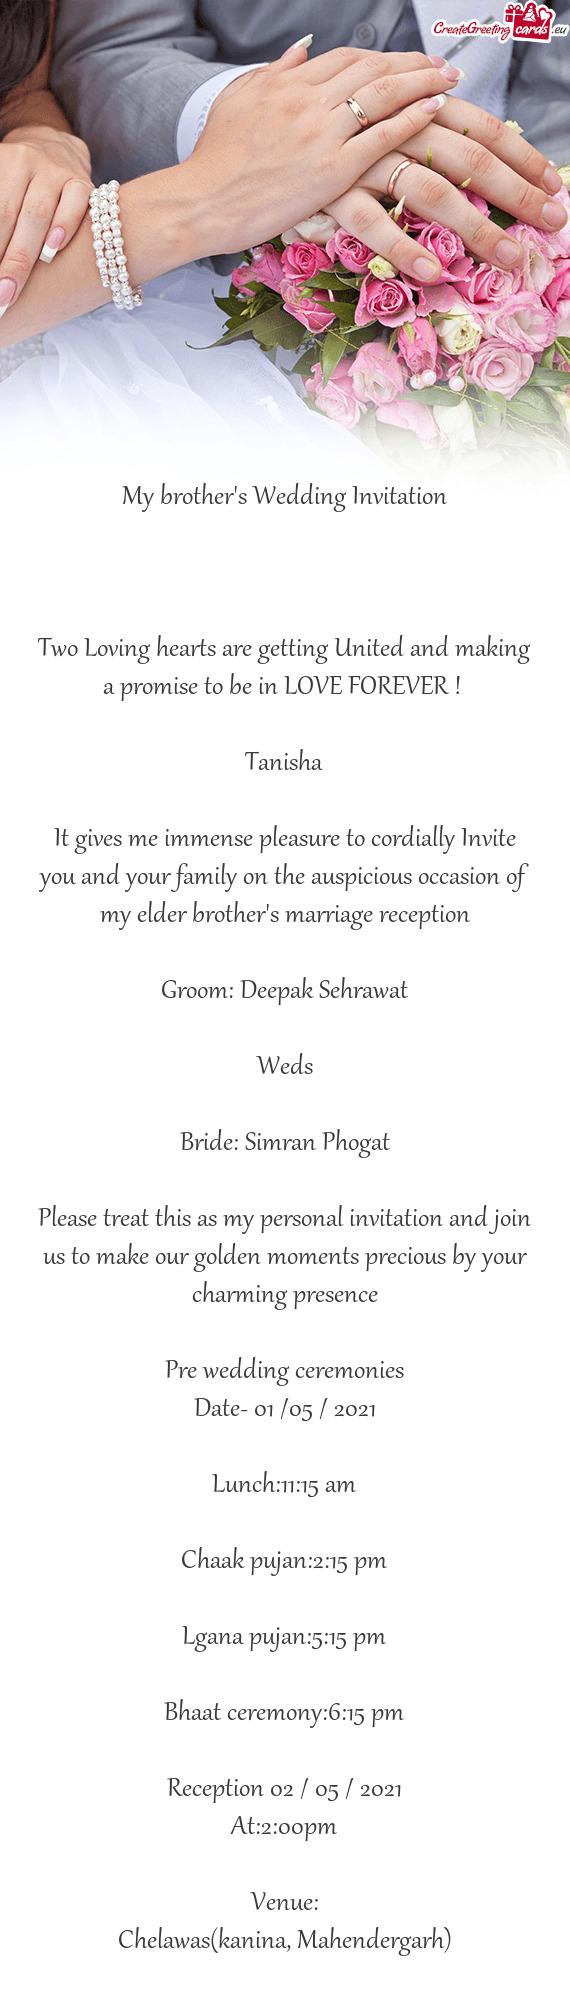 Bride: Simran Phogat